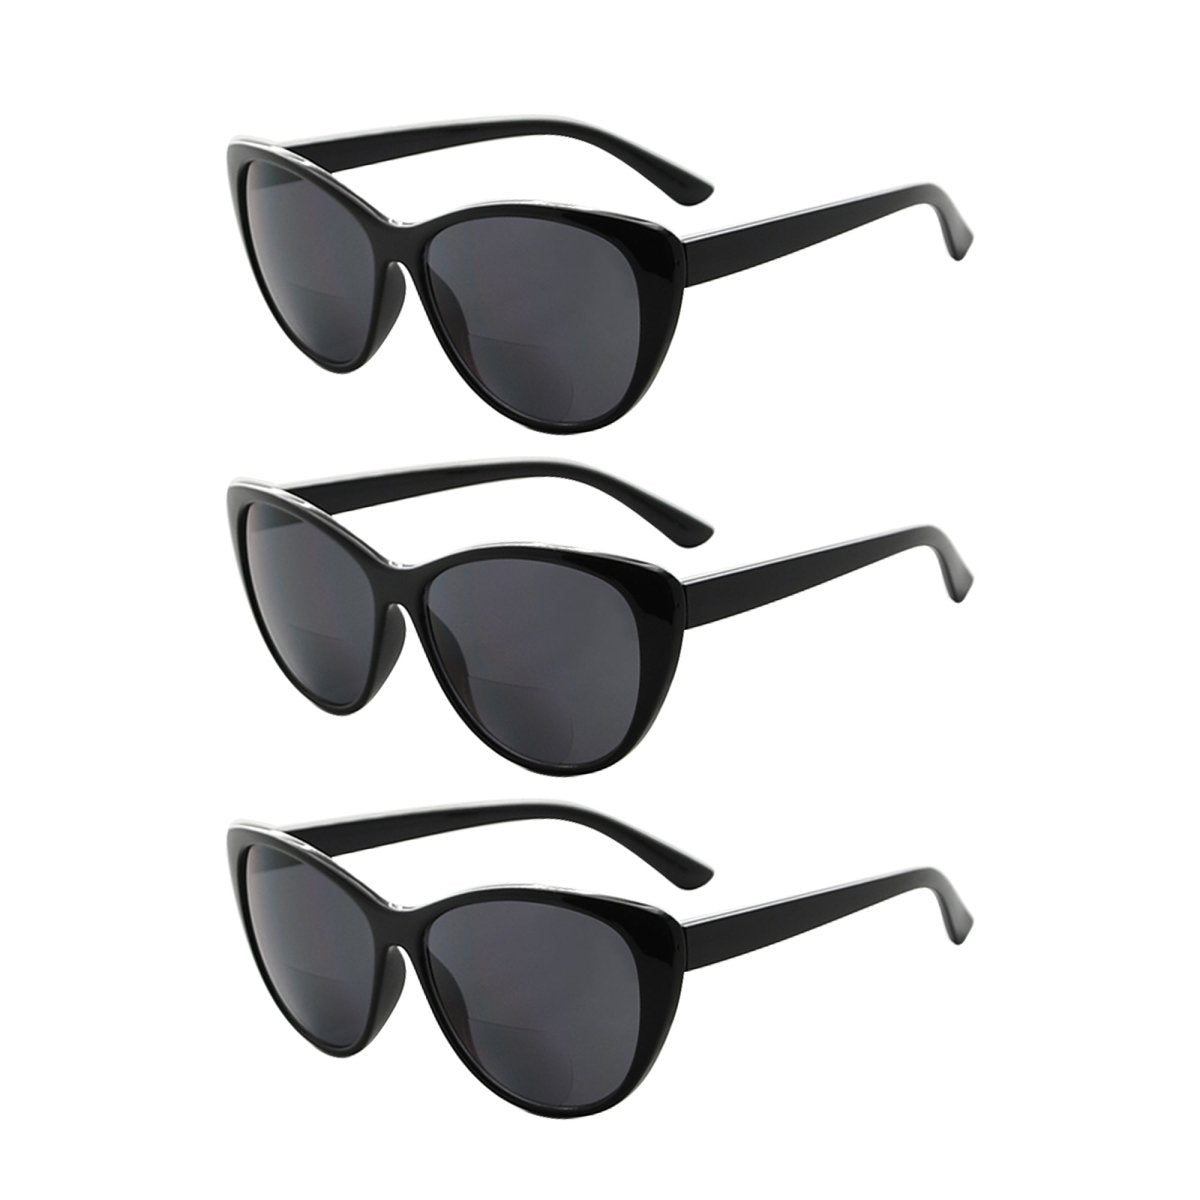 3 Pack Cat-eye Stylish Bifocal Reading Sunglasses Women S033eyekeeper.com